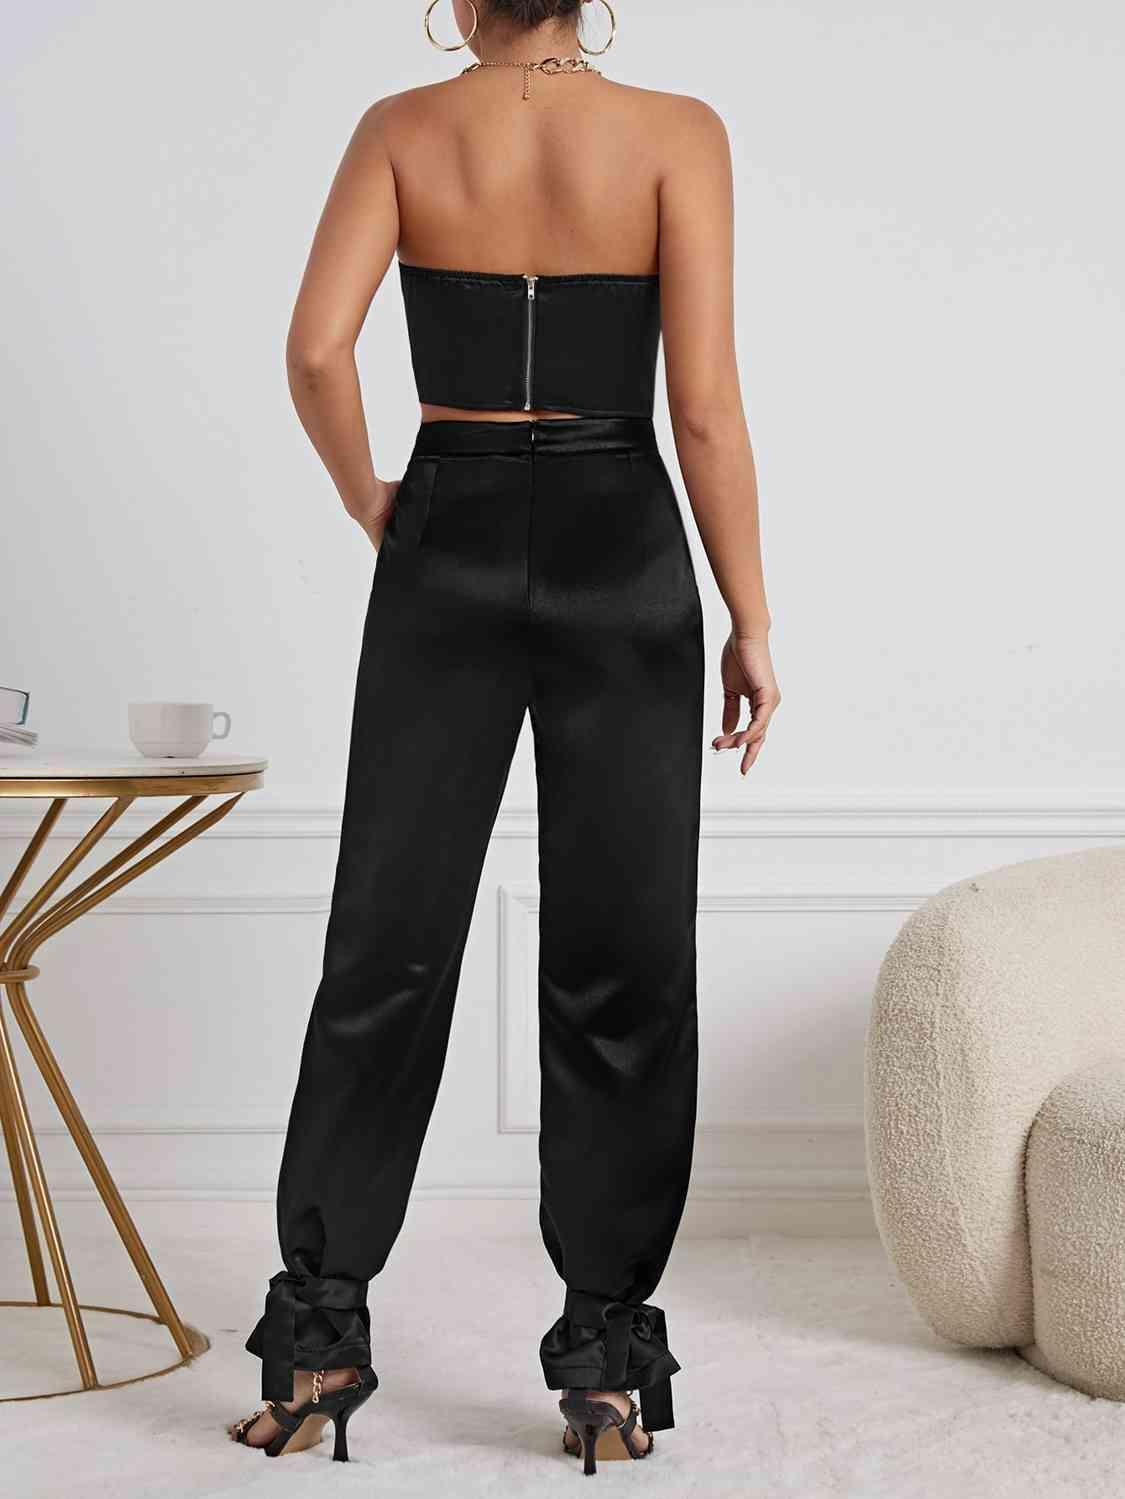 Simple Elegance Black Crop Top and Pants Set - MXSTUDIO.COM